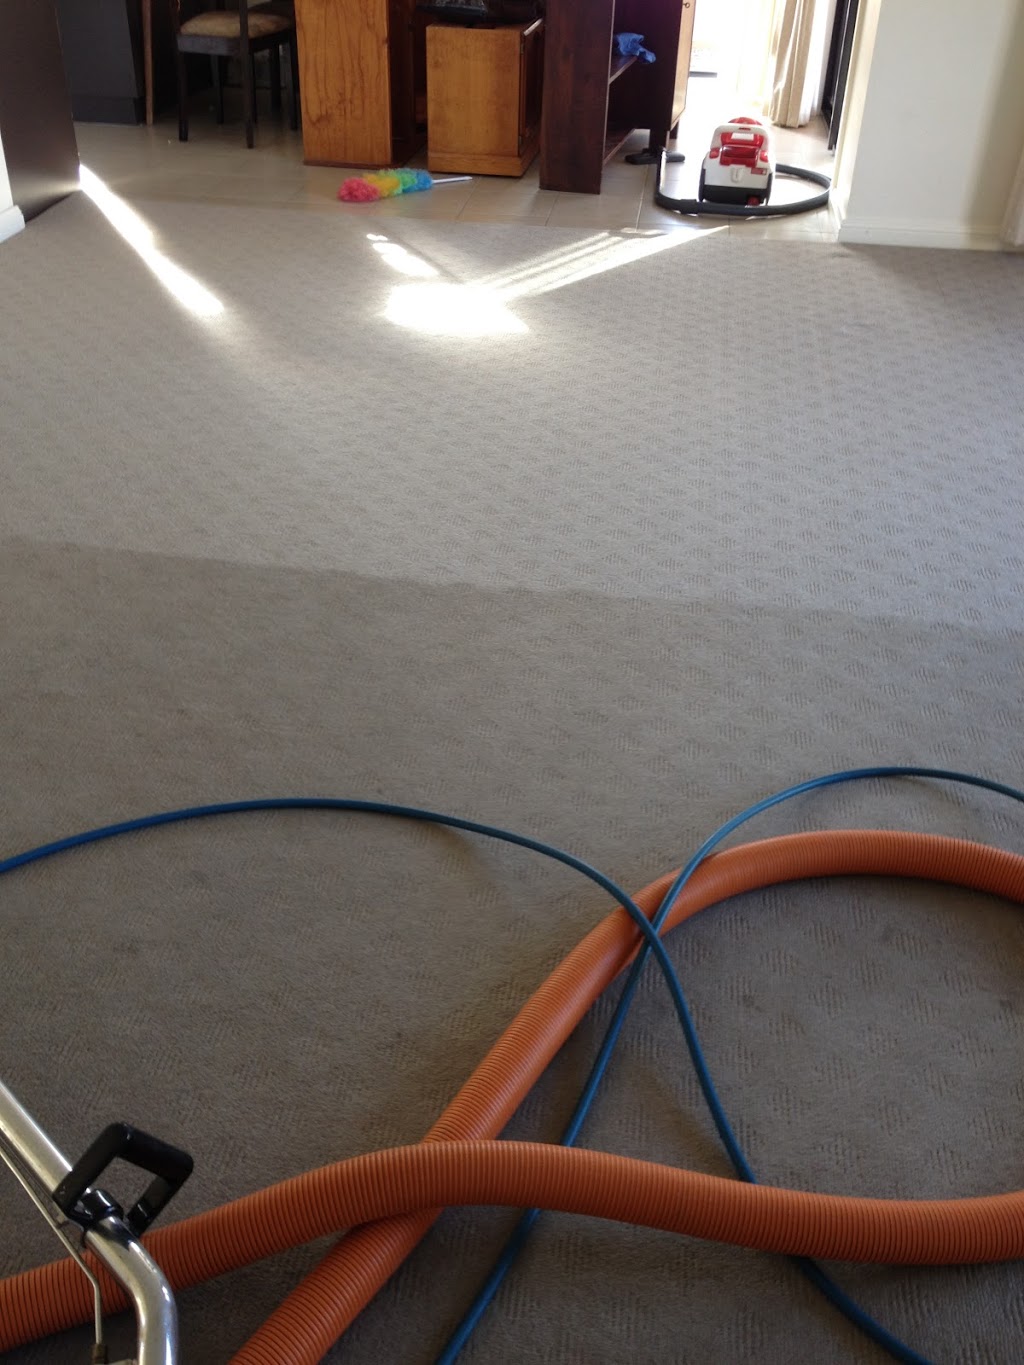 Shepparton Carpet Cleaning | laundry | 6 Windlass Ave, Mooroopna VIC 3629, Australia | 0438509718 OR +61 438 509 718